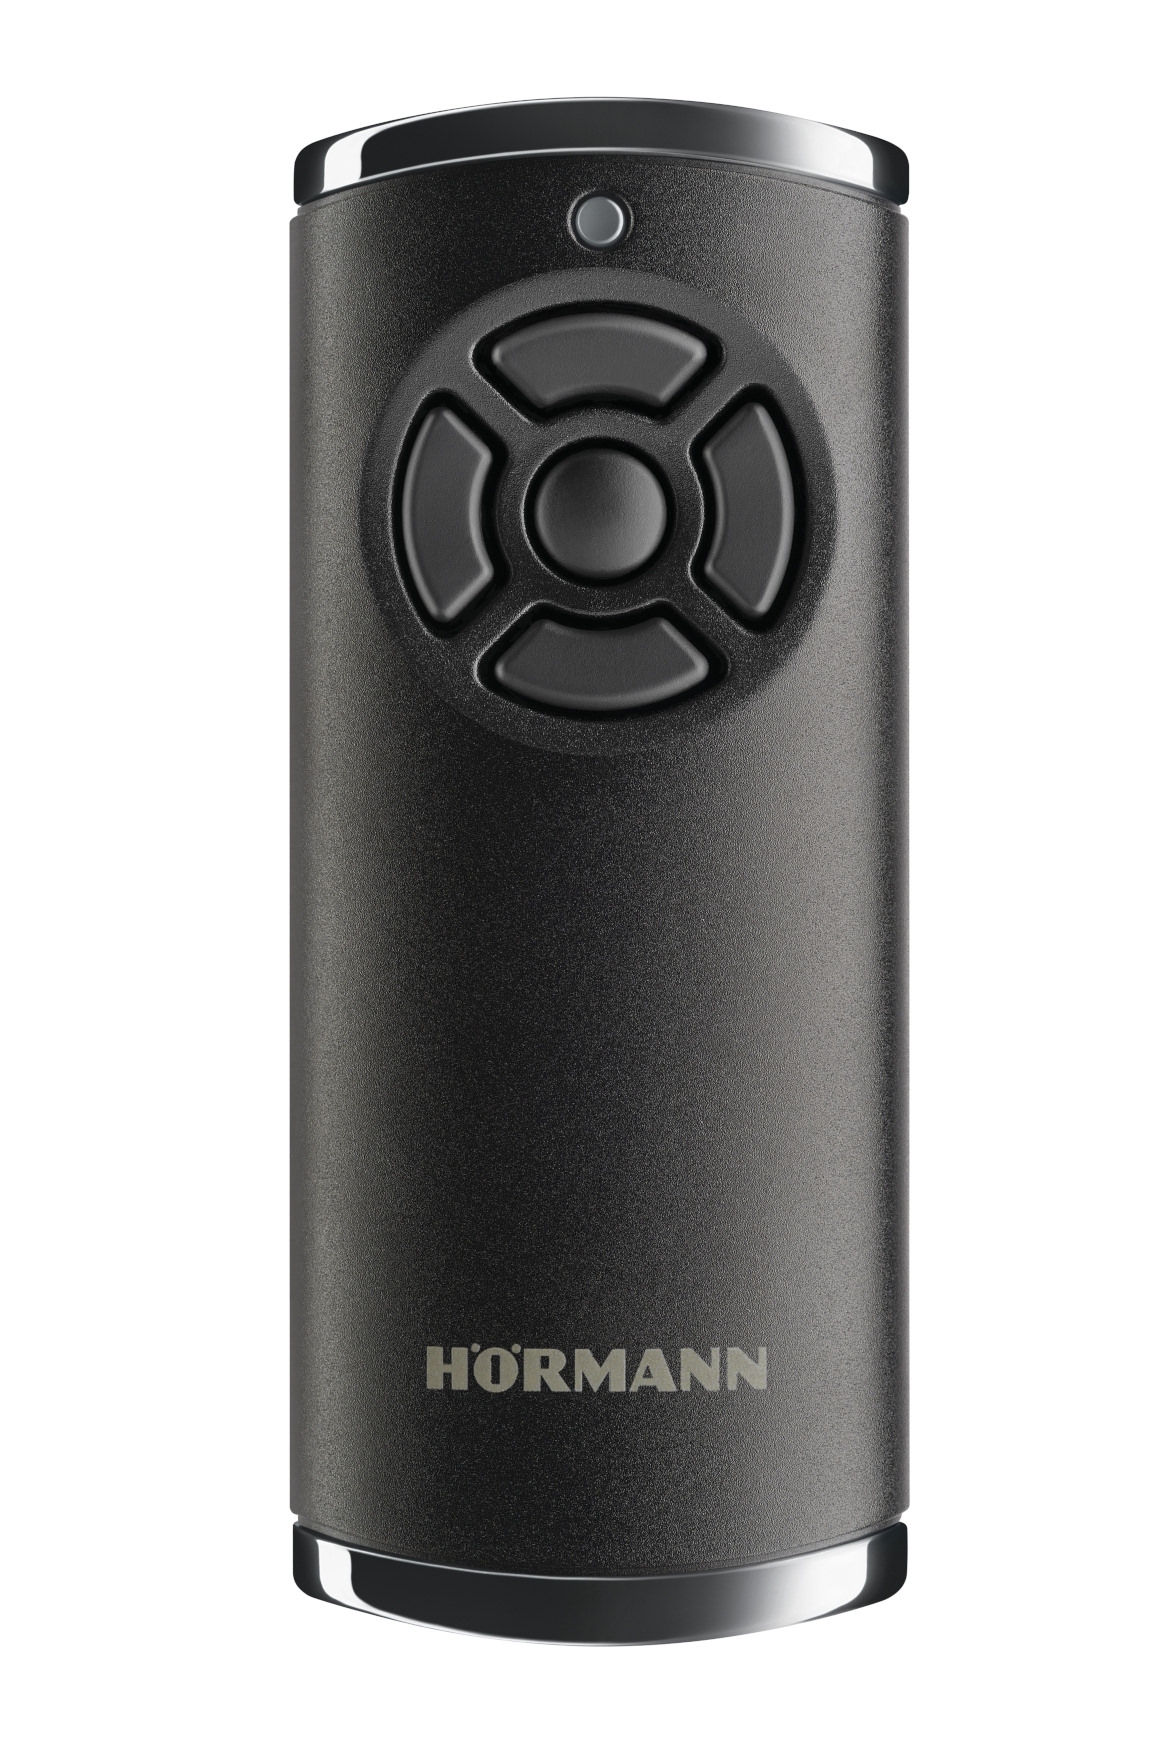 Hörmann Handsender HS 5 BiSecur Serie 3